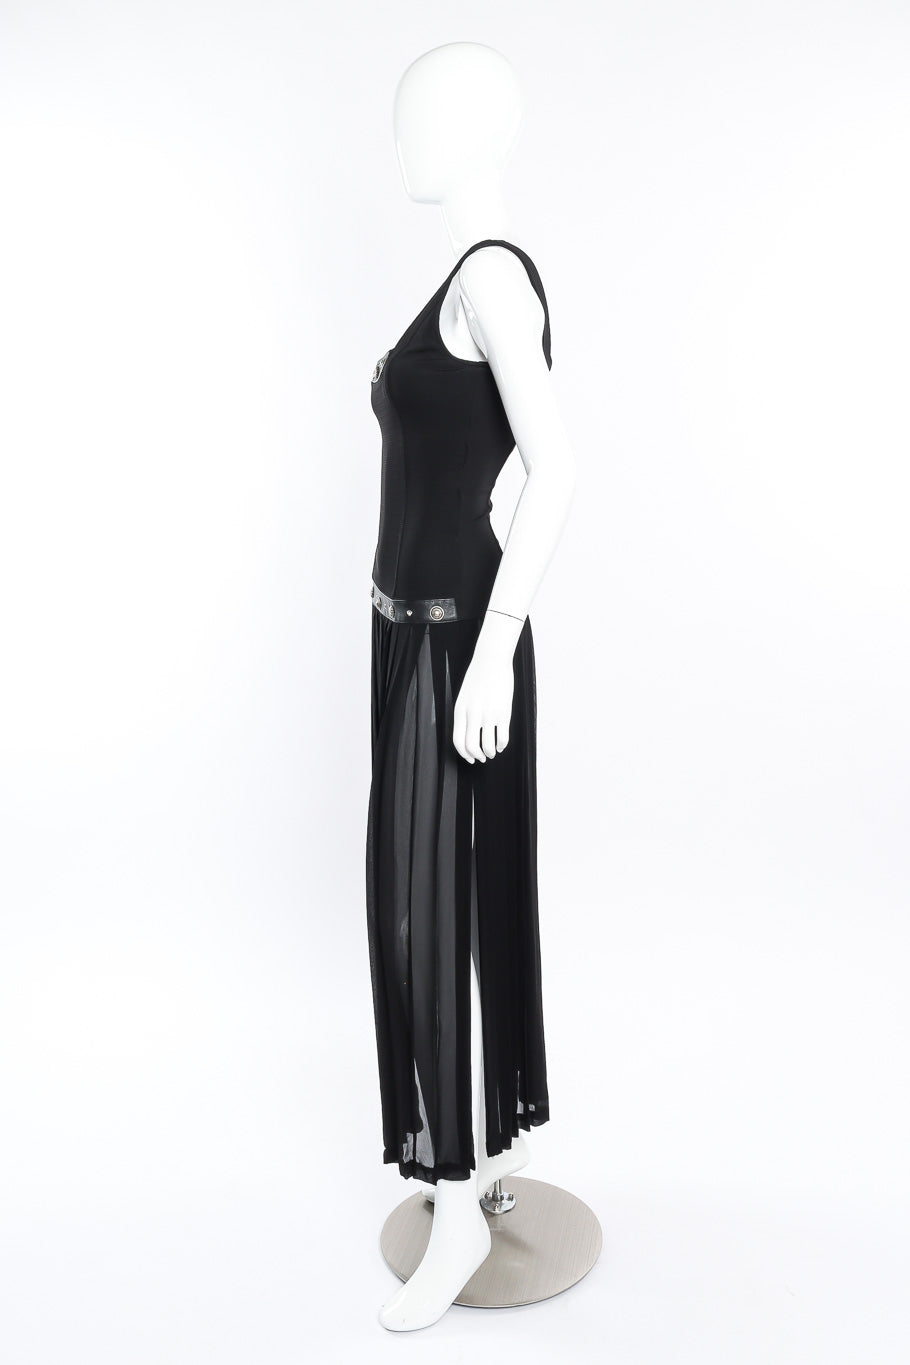 Vintage John Murrough Studded Maxi Dress side view on mannequin @Recessla